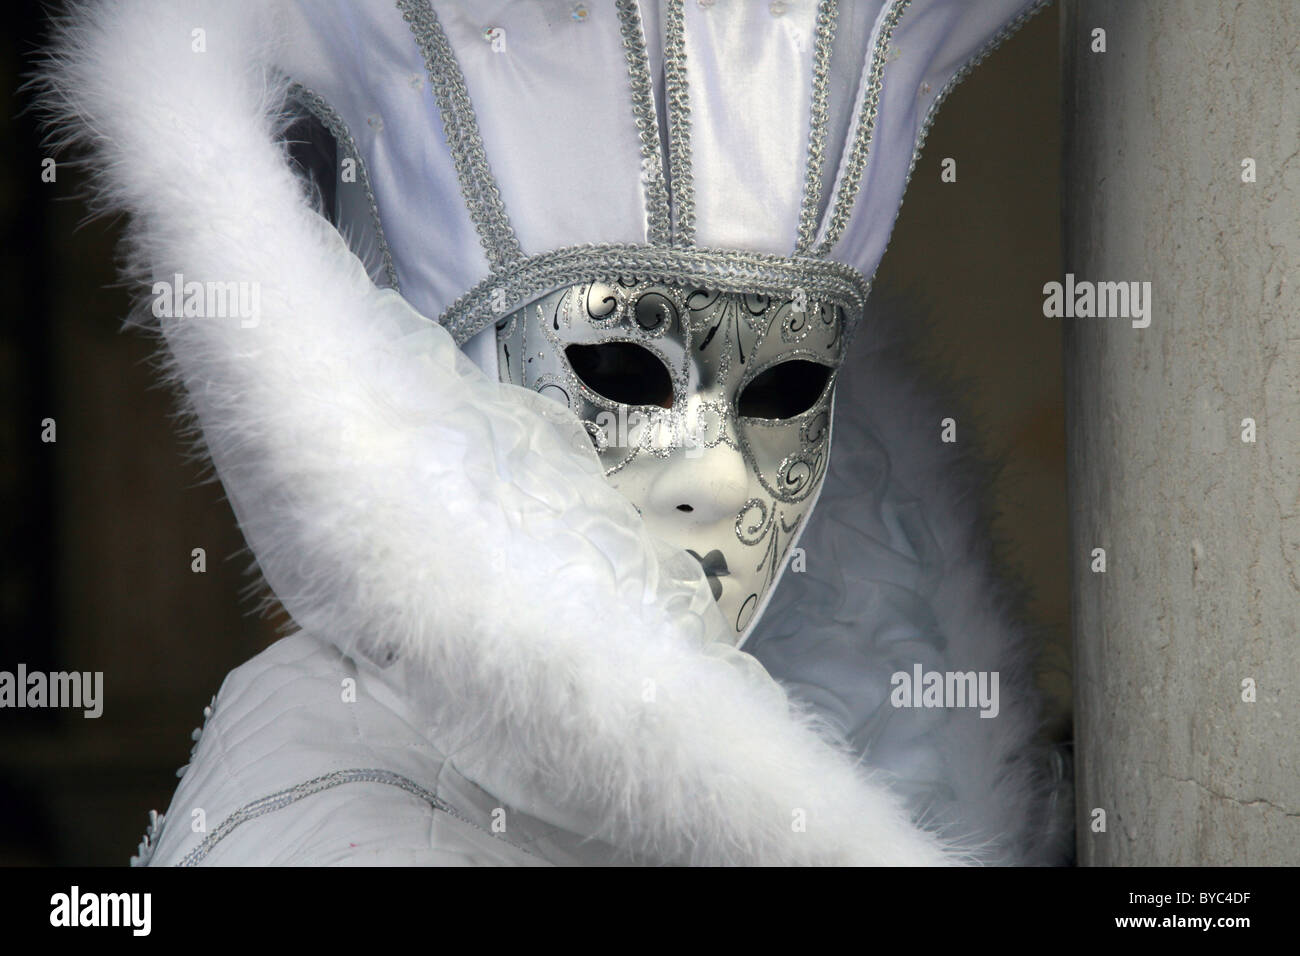 Maske Venedig - Karneval - einige Bilder aus dem Fett Dienstag in Venedig Stockfoto